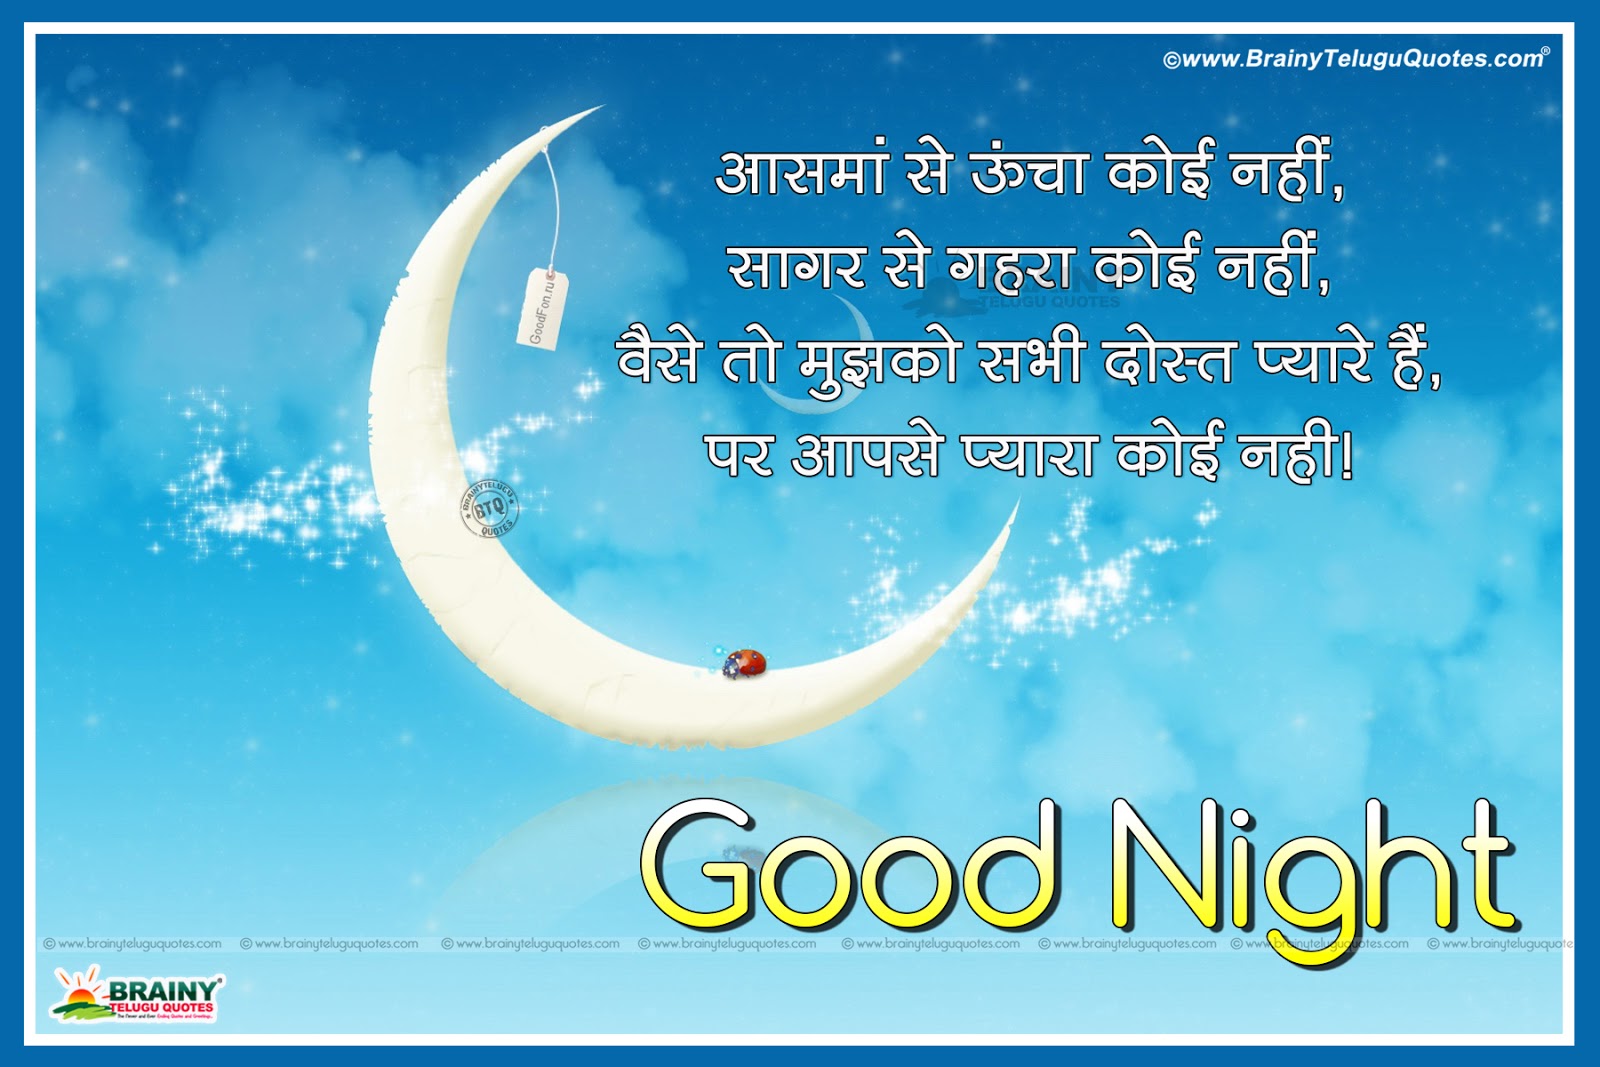 Best Hindi Good Night Wishes Quotes Messages shayari images | BrainySms